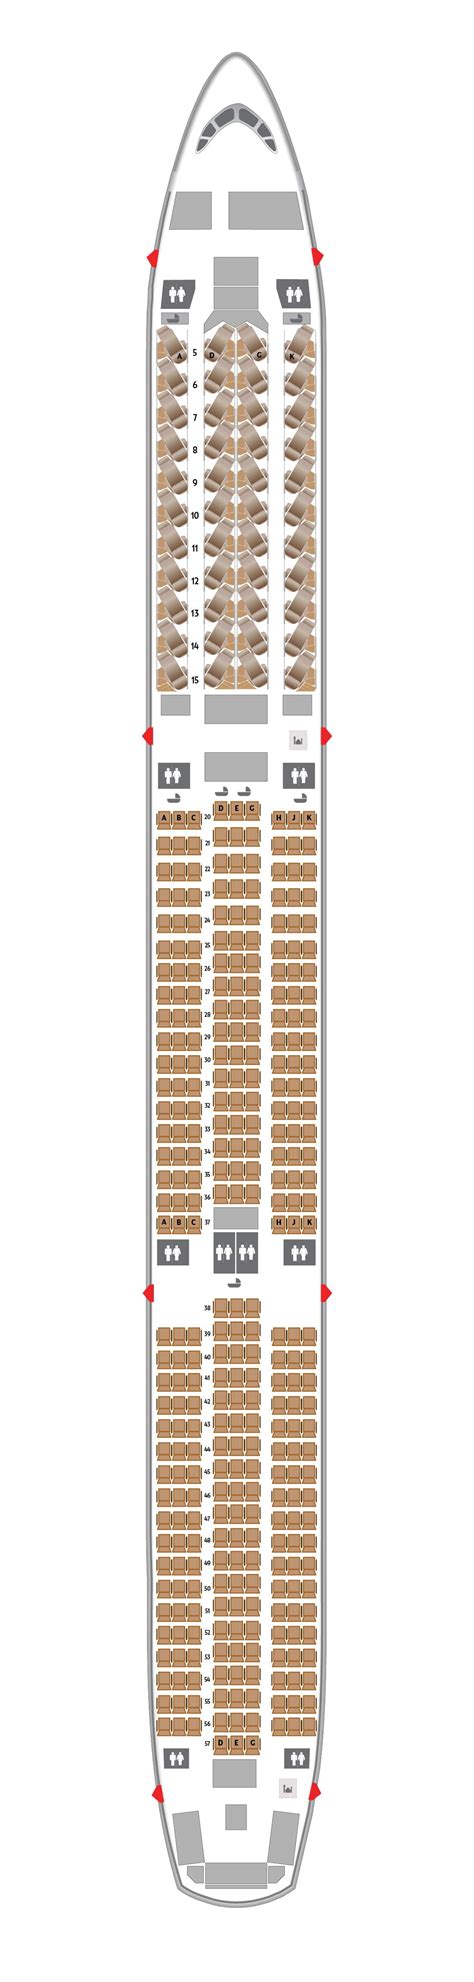 Etihad Airways Ey 100 Seat Map